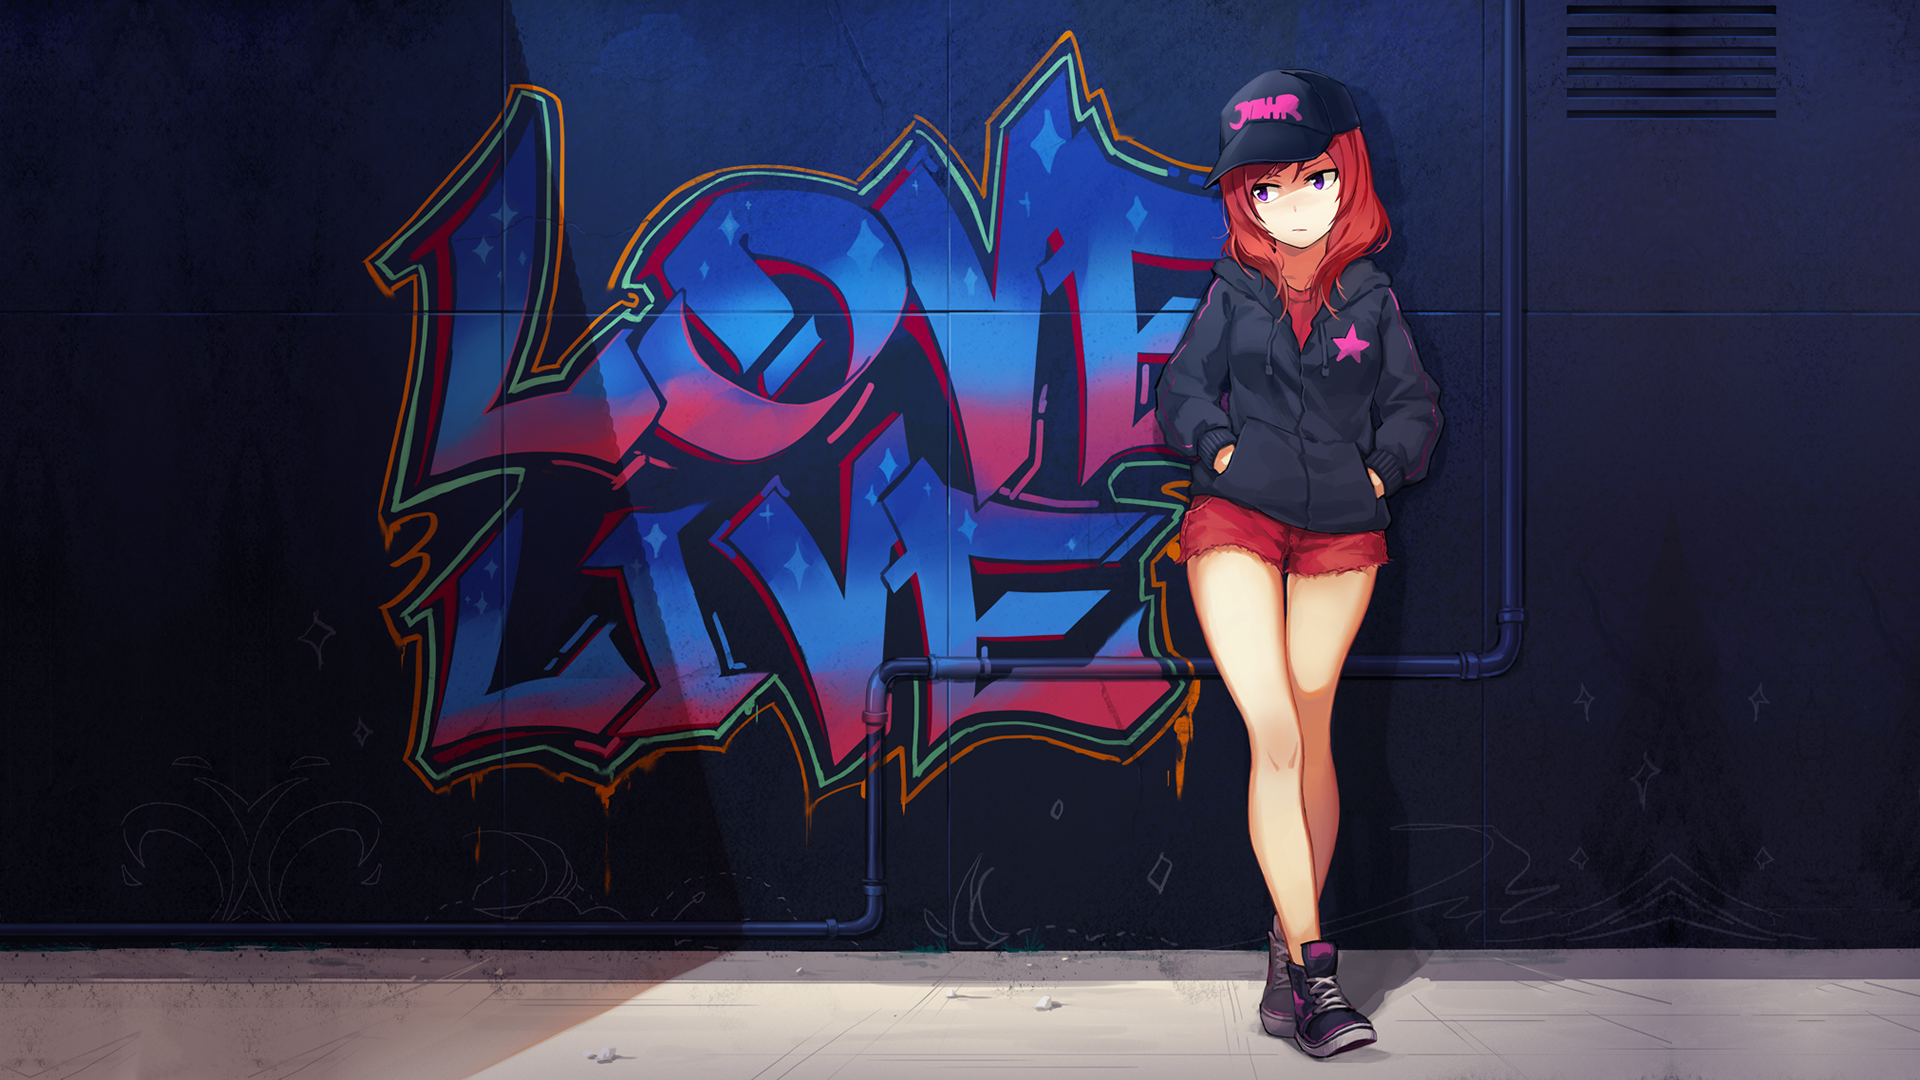 Anime 1920x1080 anime girls anime Love Live! graffiti Nishikino Maki redhead legs together hat women with hats looking away shorts